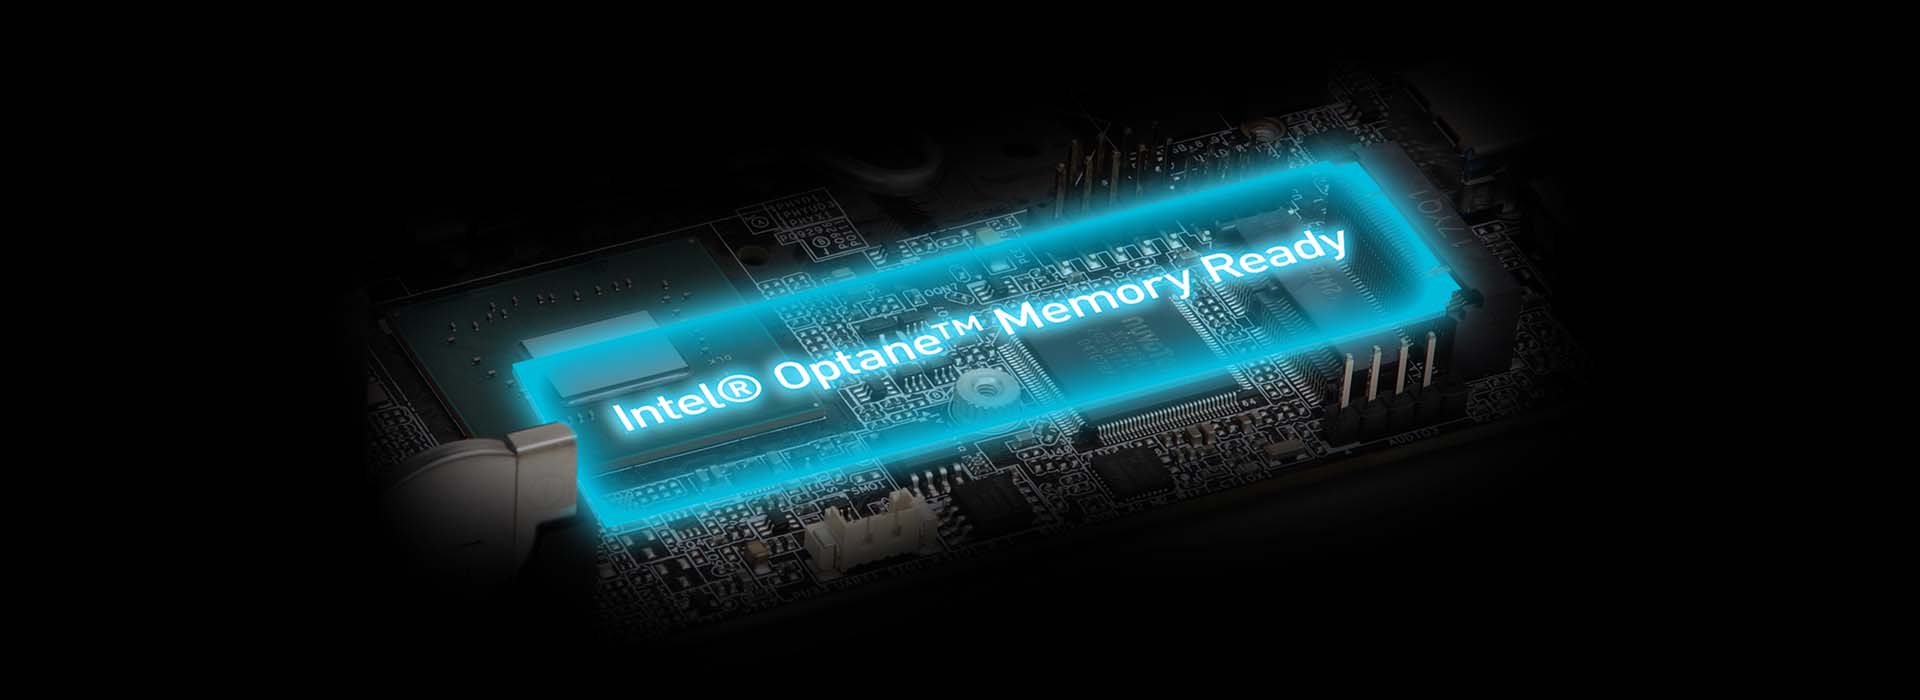 DM660 Optane Memory Technology